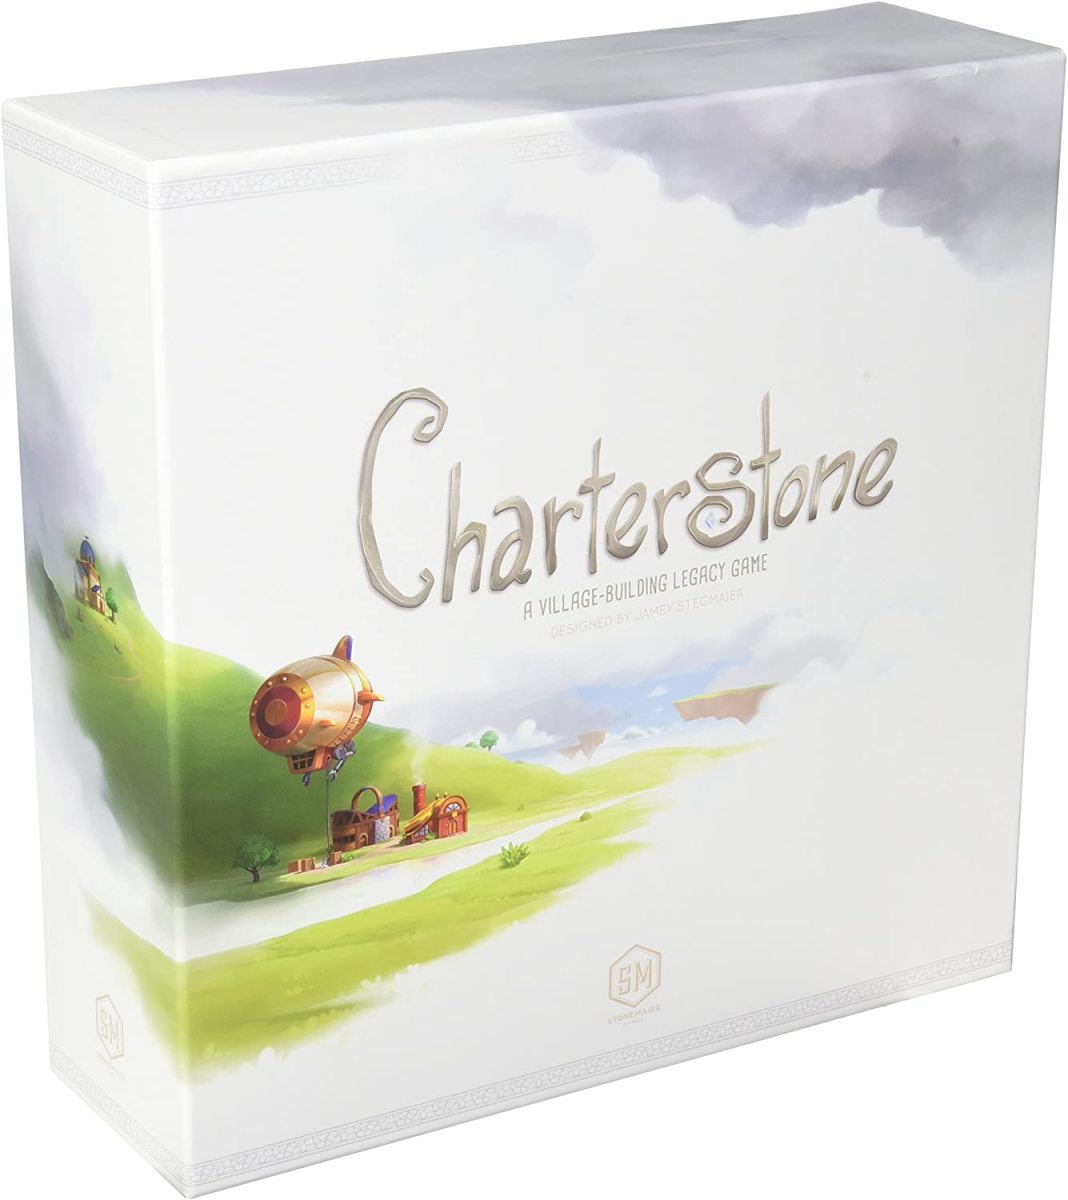 "Charterstone"